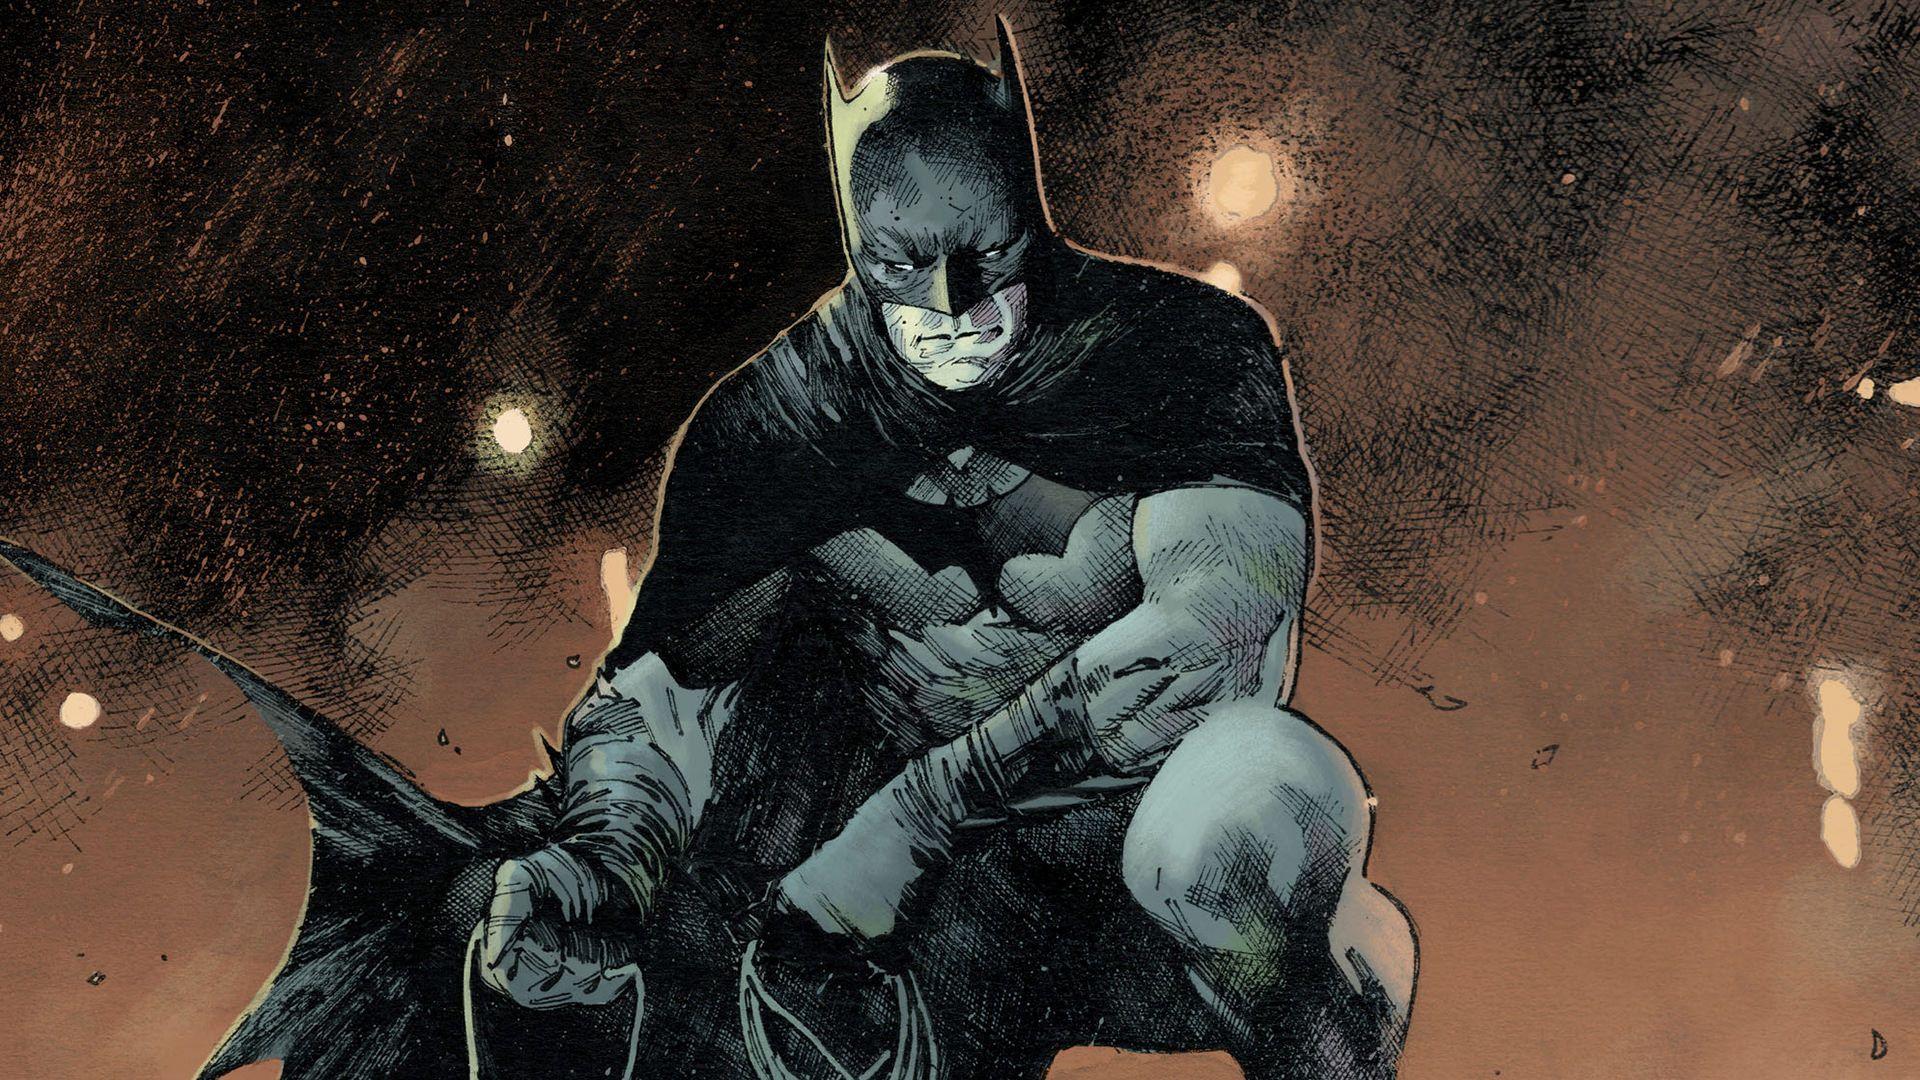 Batman Comic Art, HD Superheroes, 4k Wallpaper, Image, Background